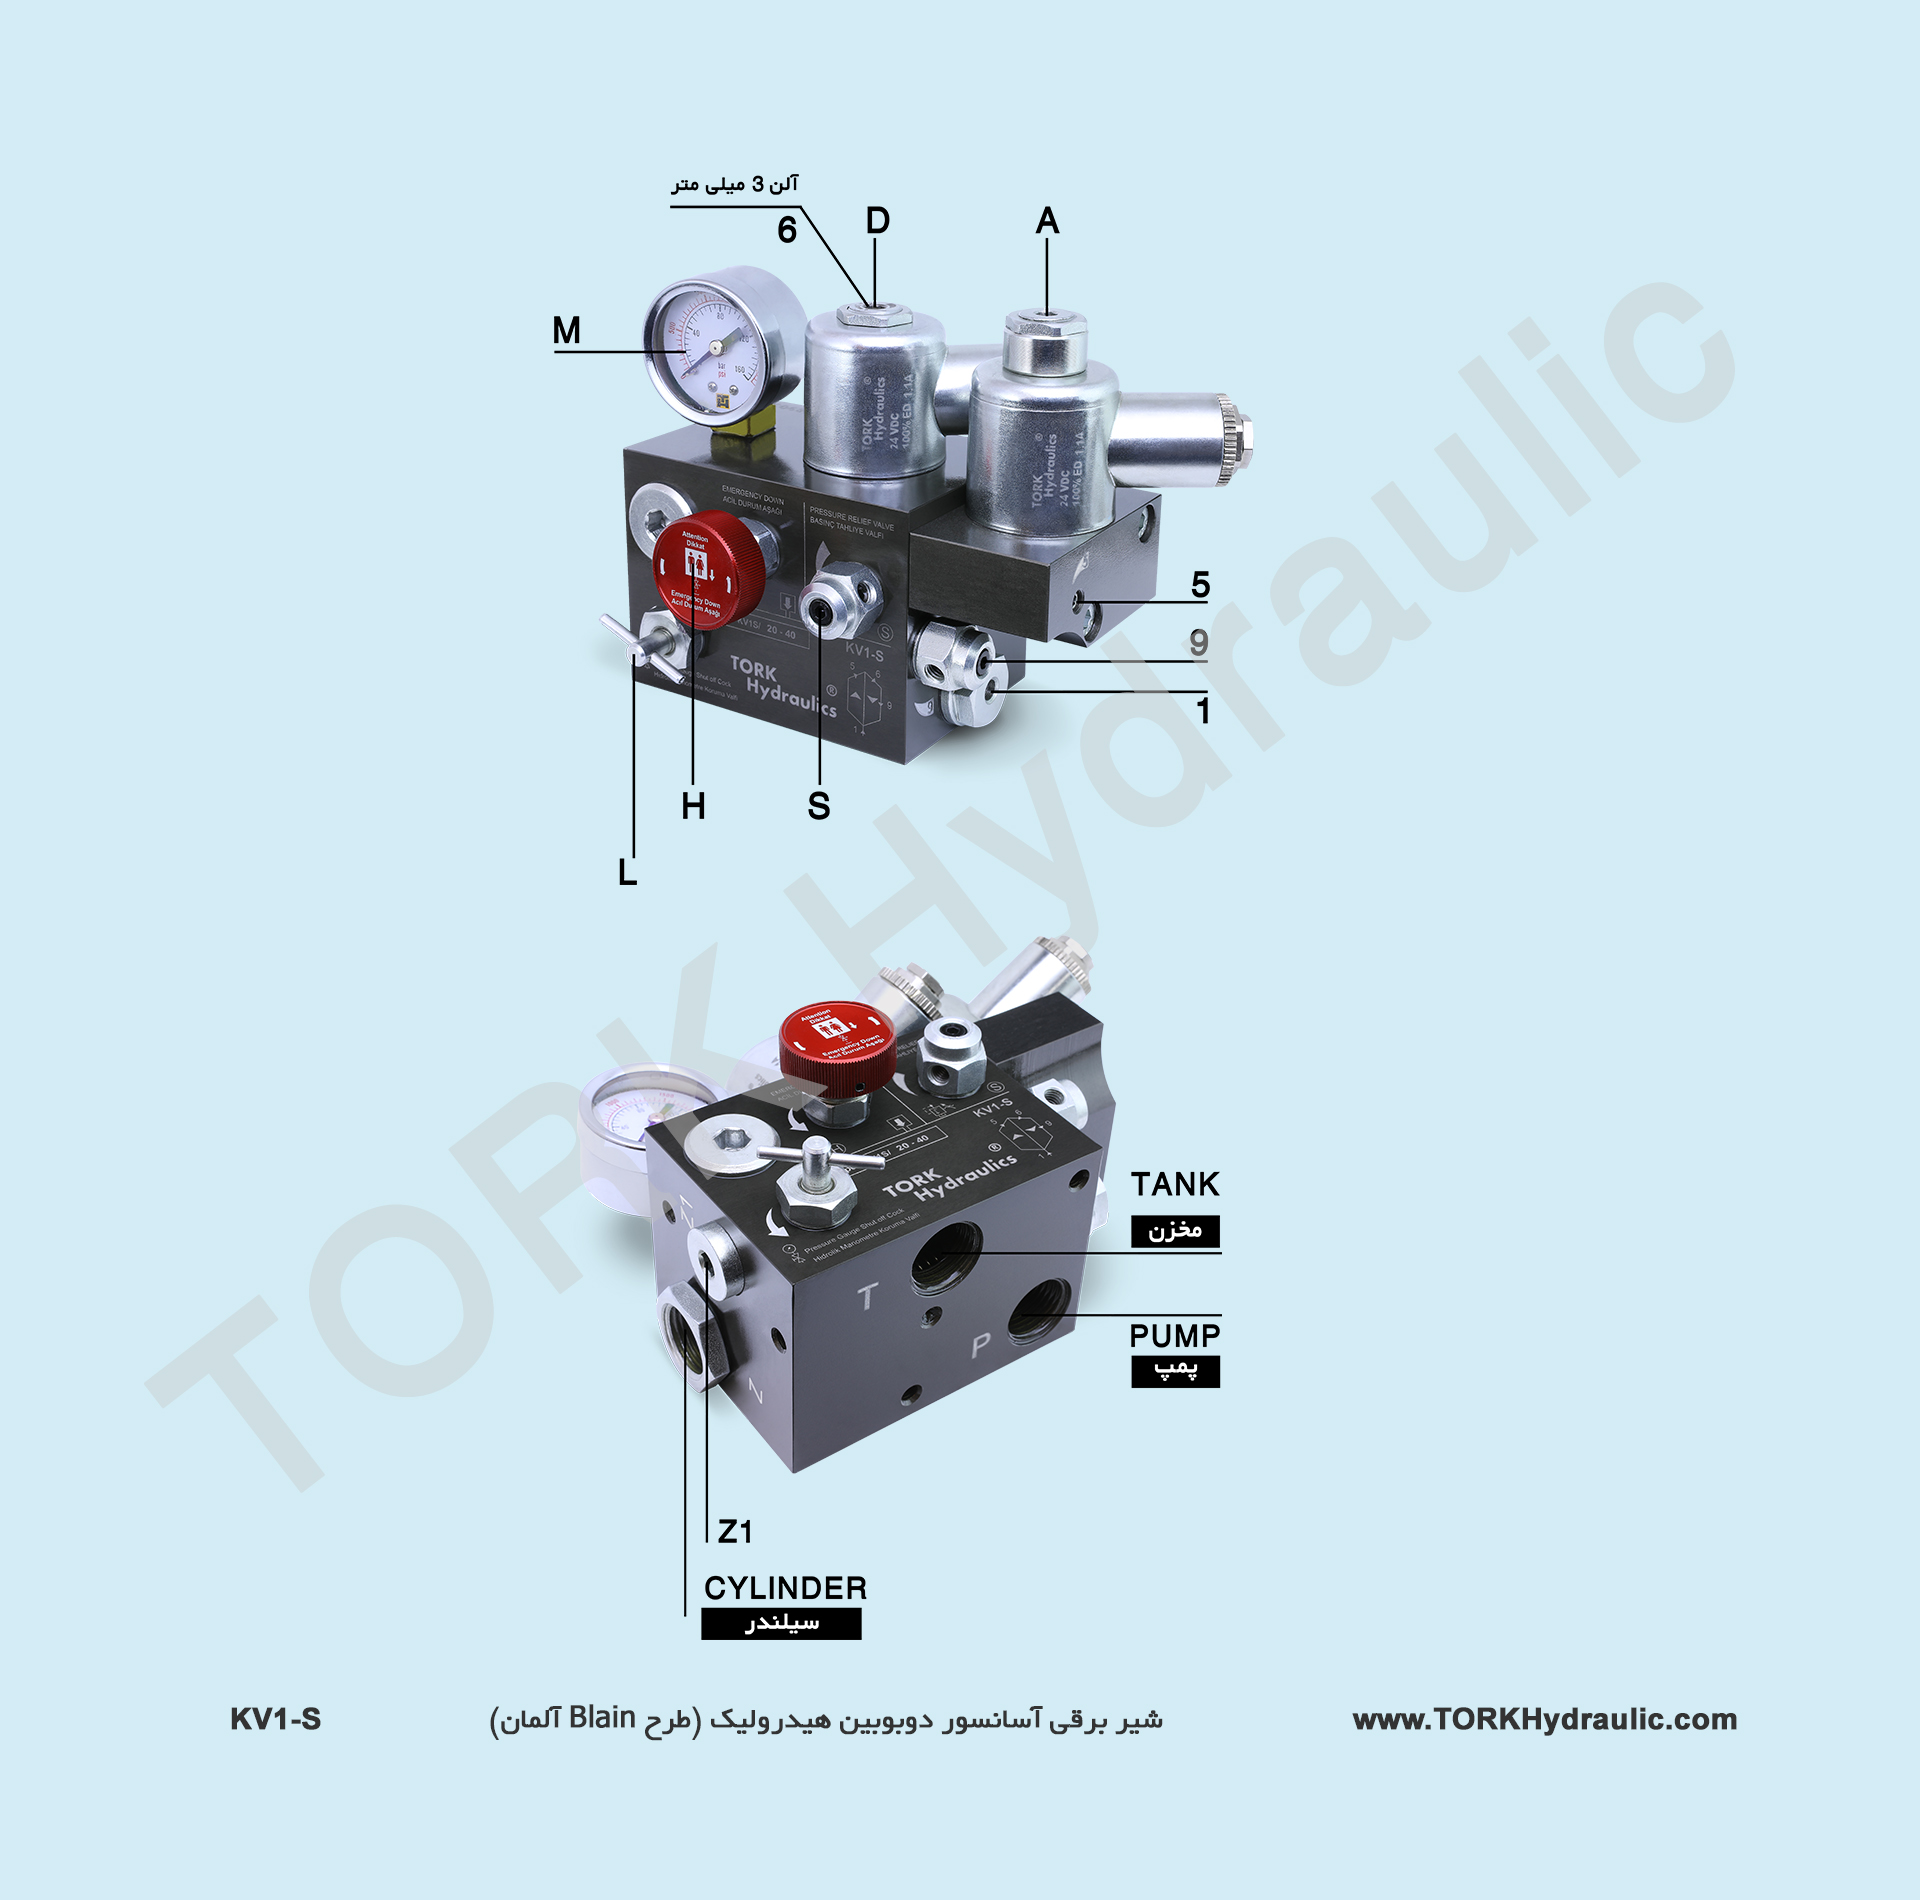 TORK Hydraulics BLAIN dual coil solenoid valve installation guide